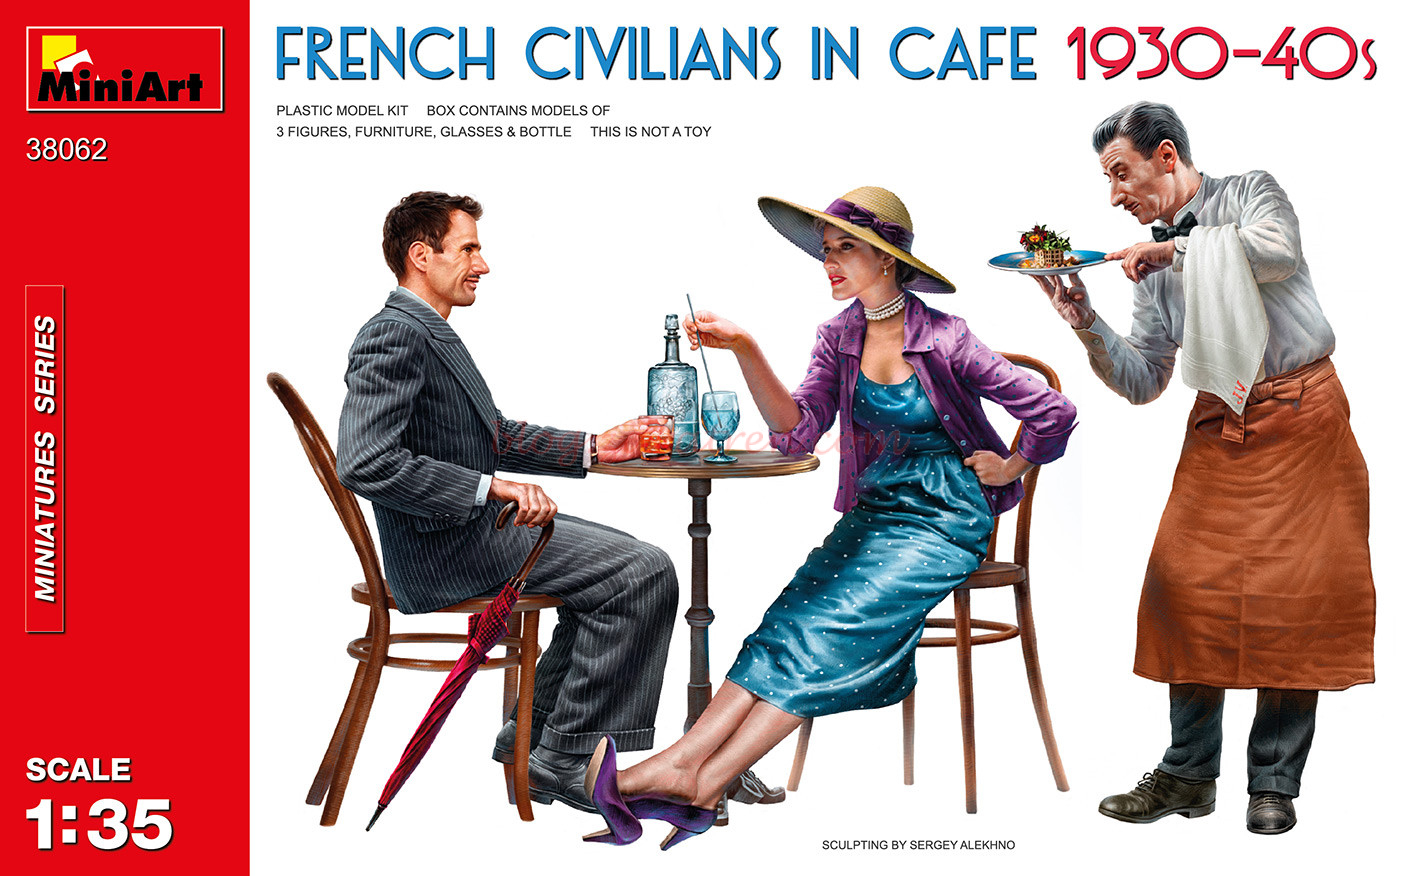 Miniart – Figuras de Civiles Franceses en Café 1930-40s, Escala 1:35, Ref: 38062